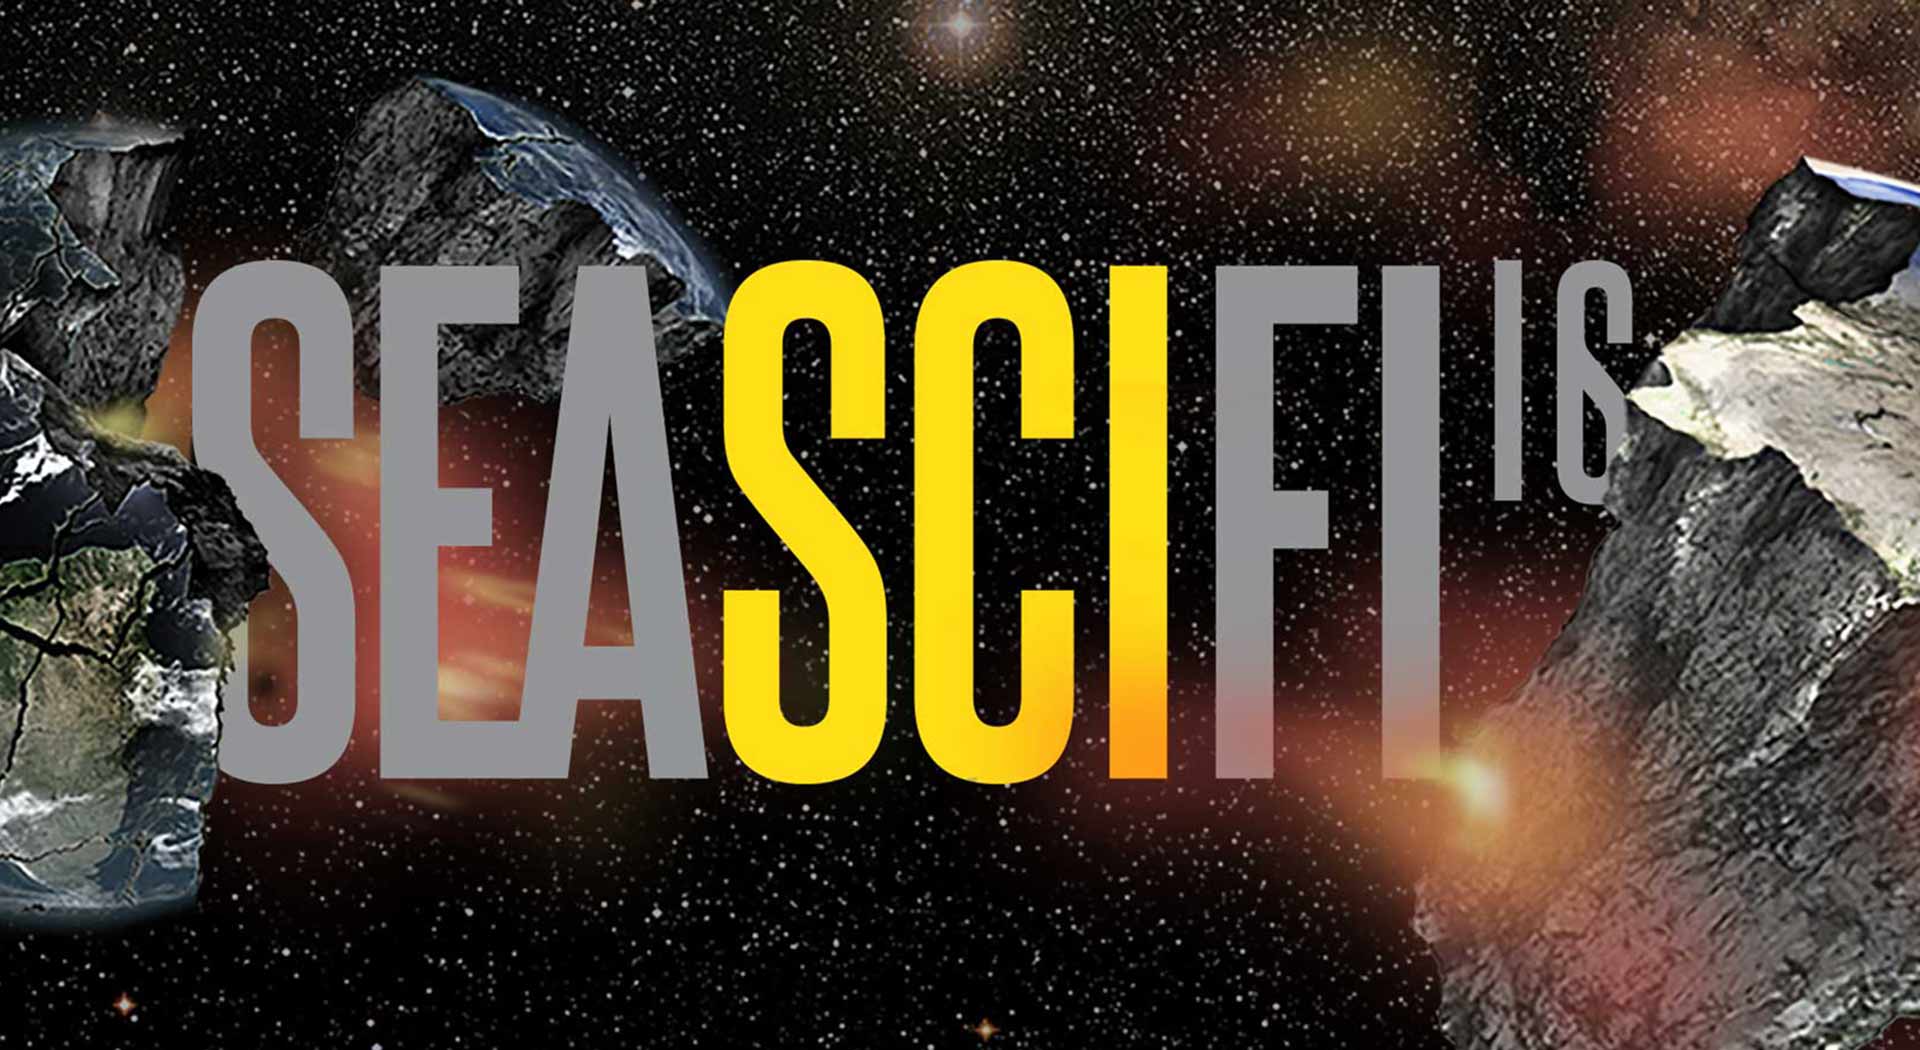 Seattle Science Fiction Film Festival by David Rossman